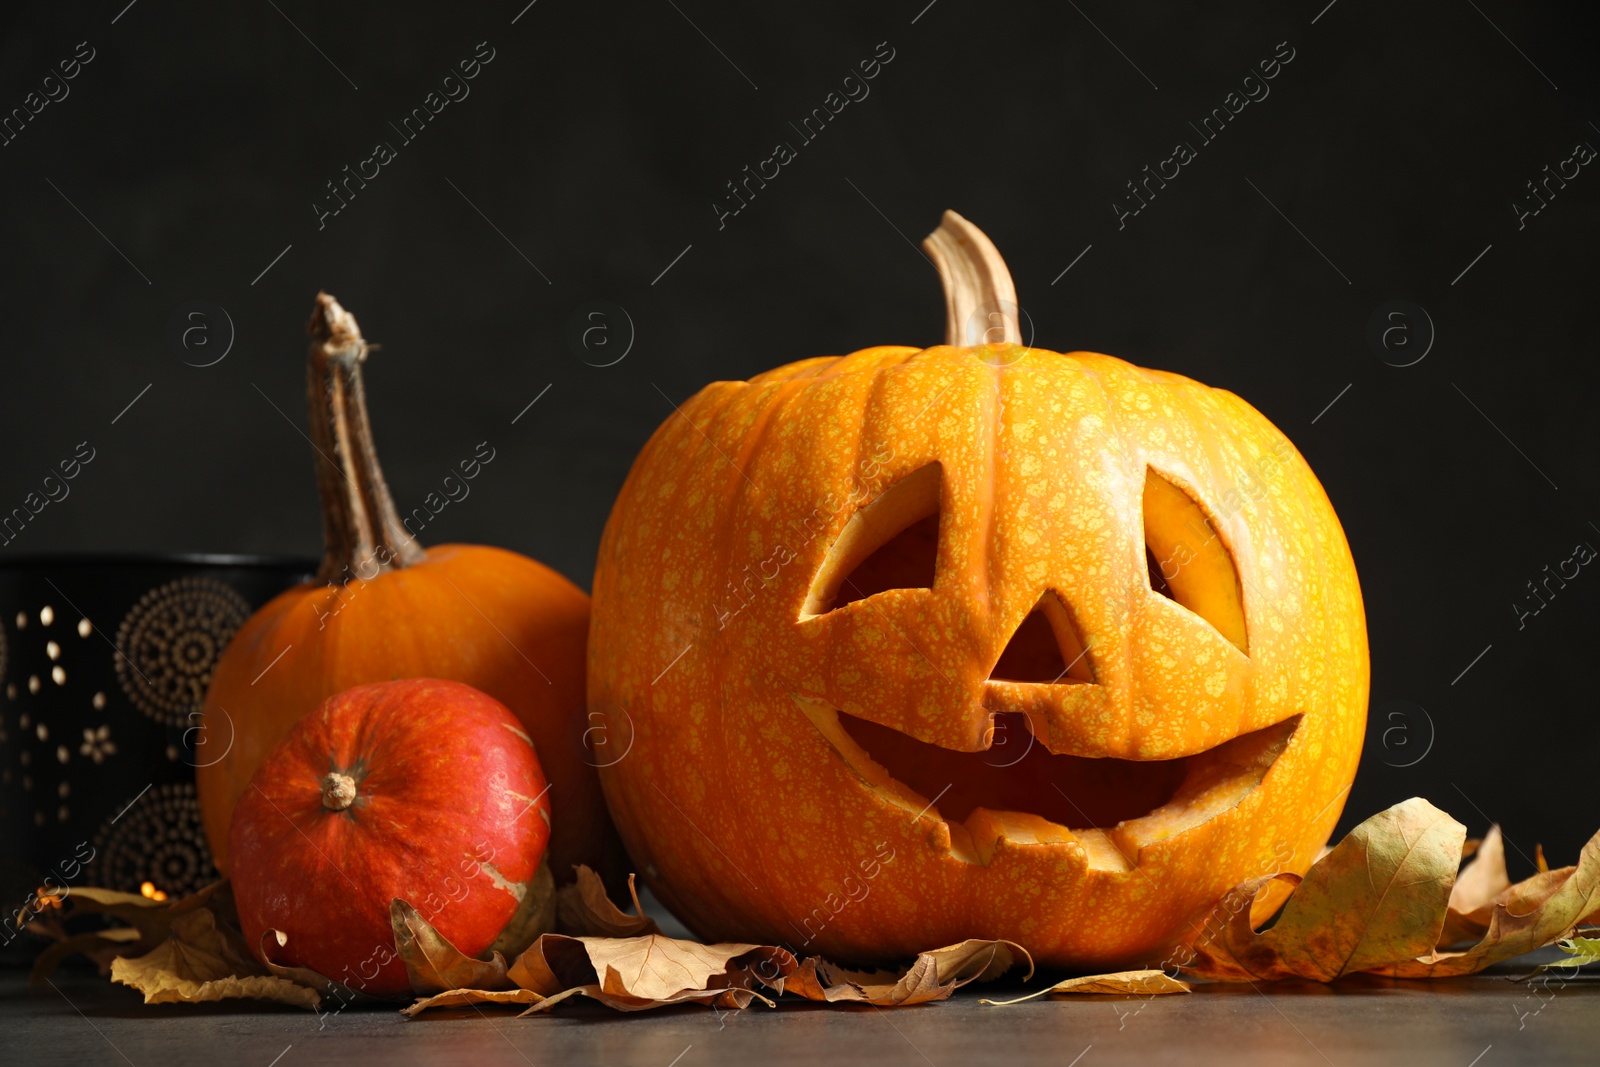 Photo of Composition with pumpkin head on dark background. Jack lantern - traditional Halloween decor